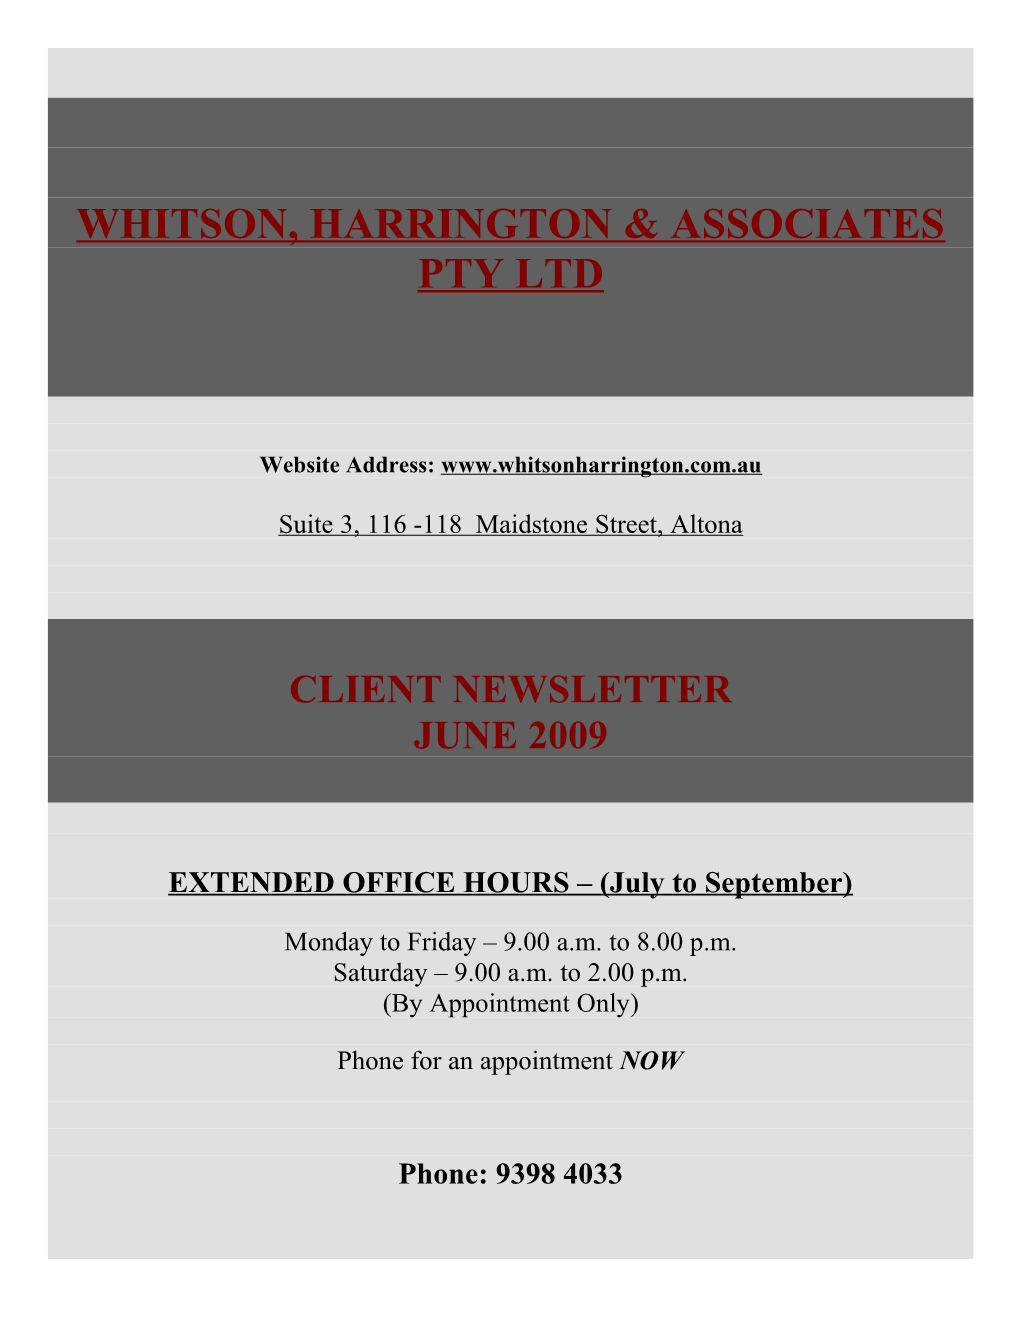 Whitson, Harrington & Associates